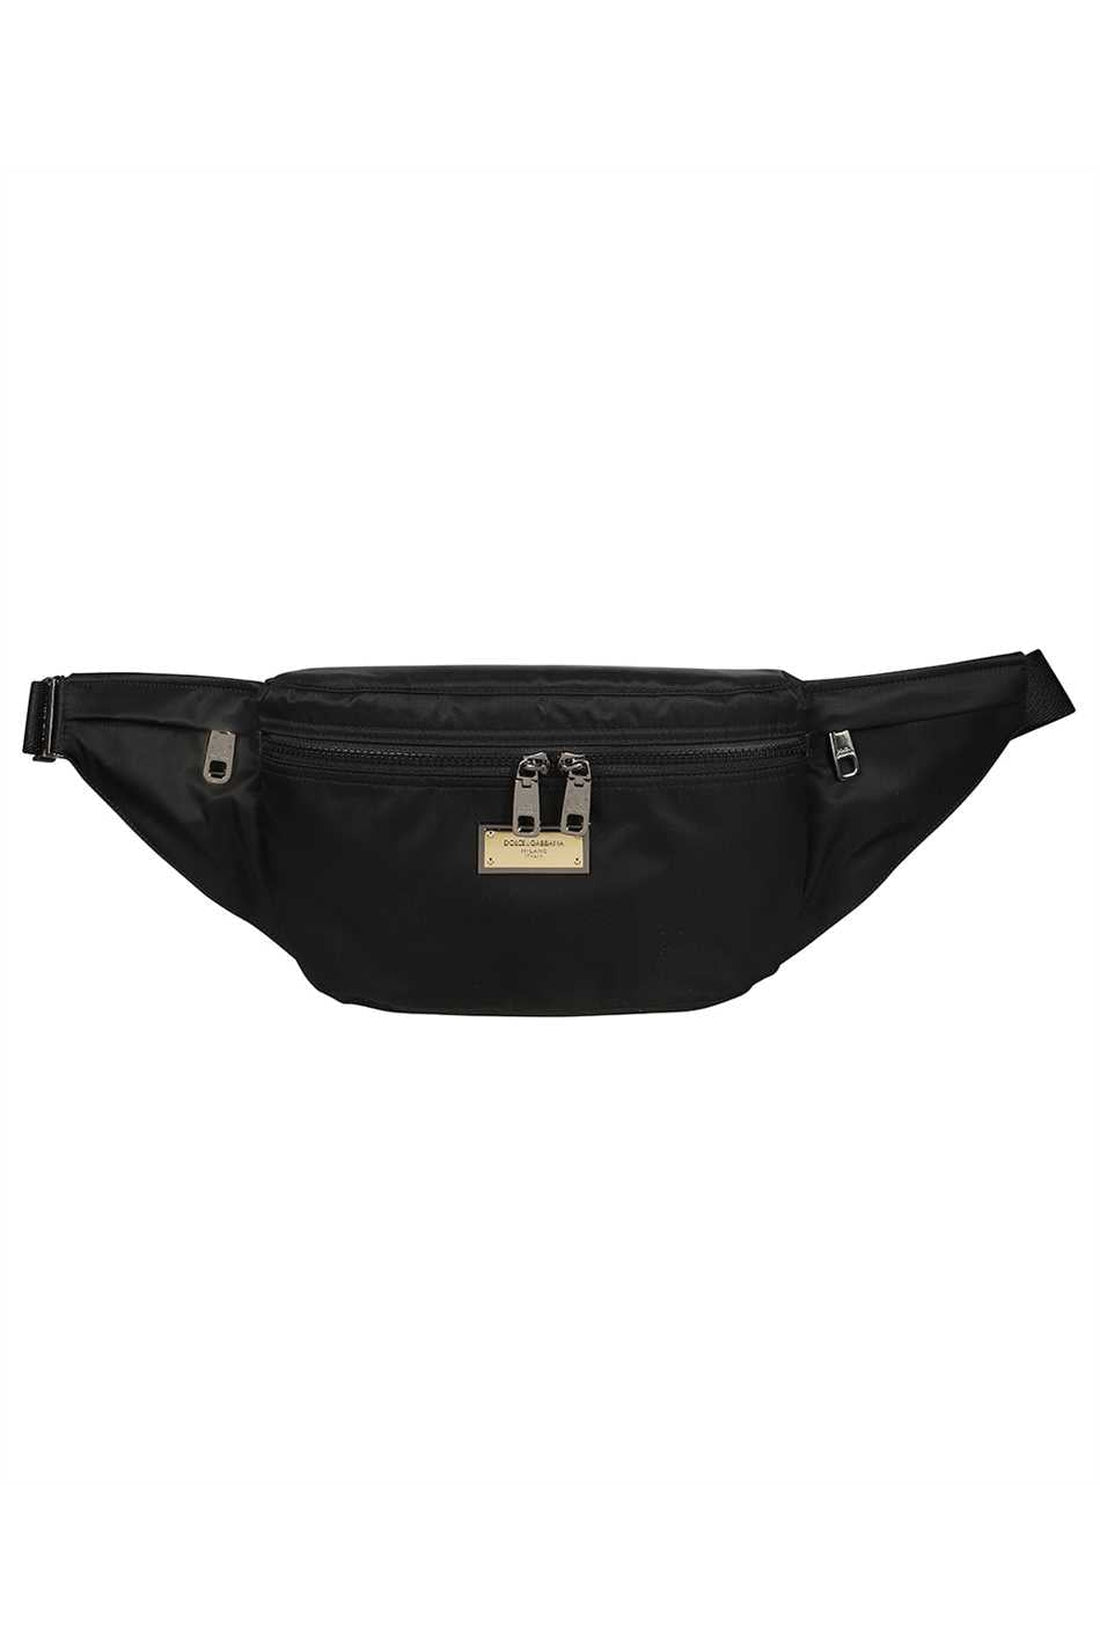 Dolce & Gabbana-OUTLET-SALE-Nylon belt bag-ARCHIVIST